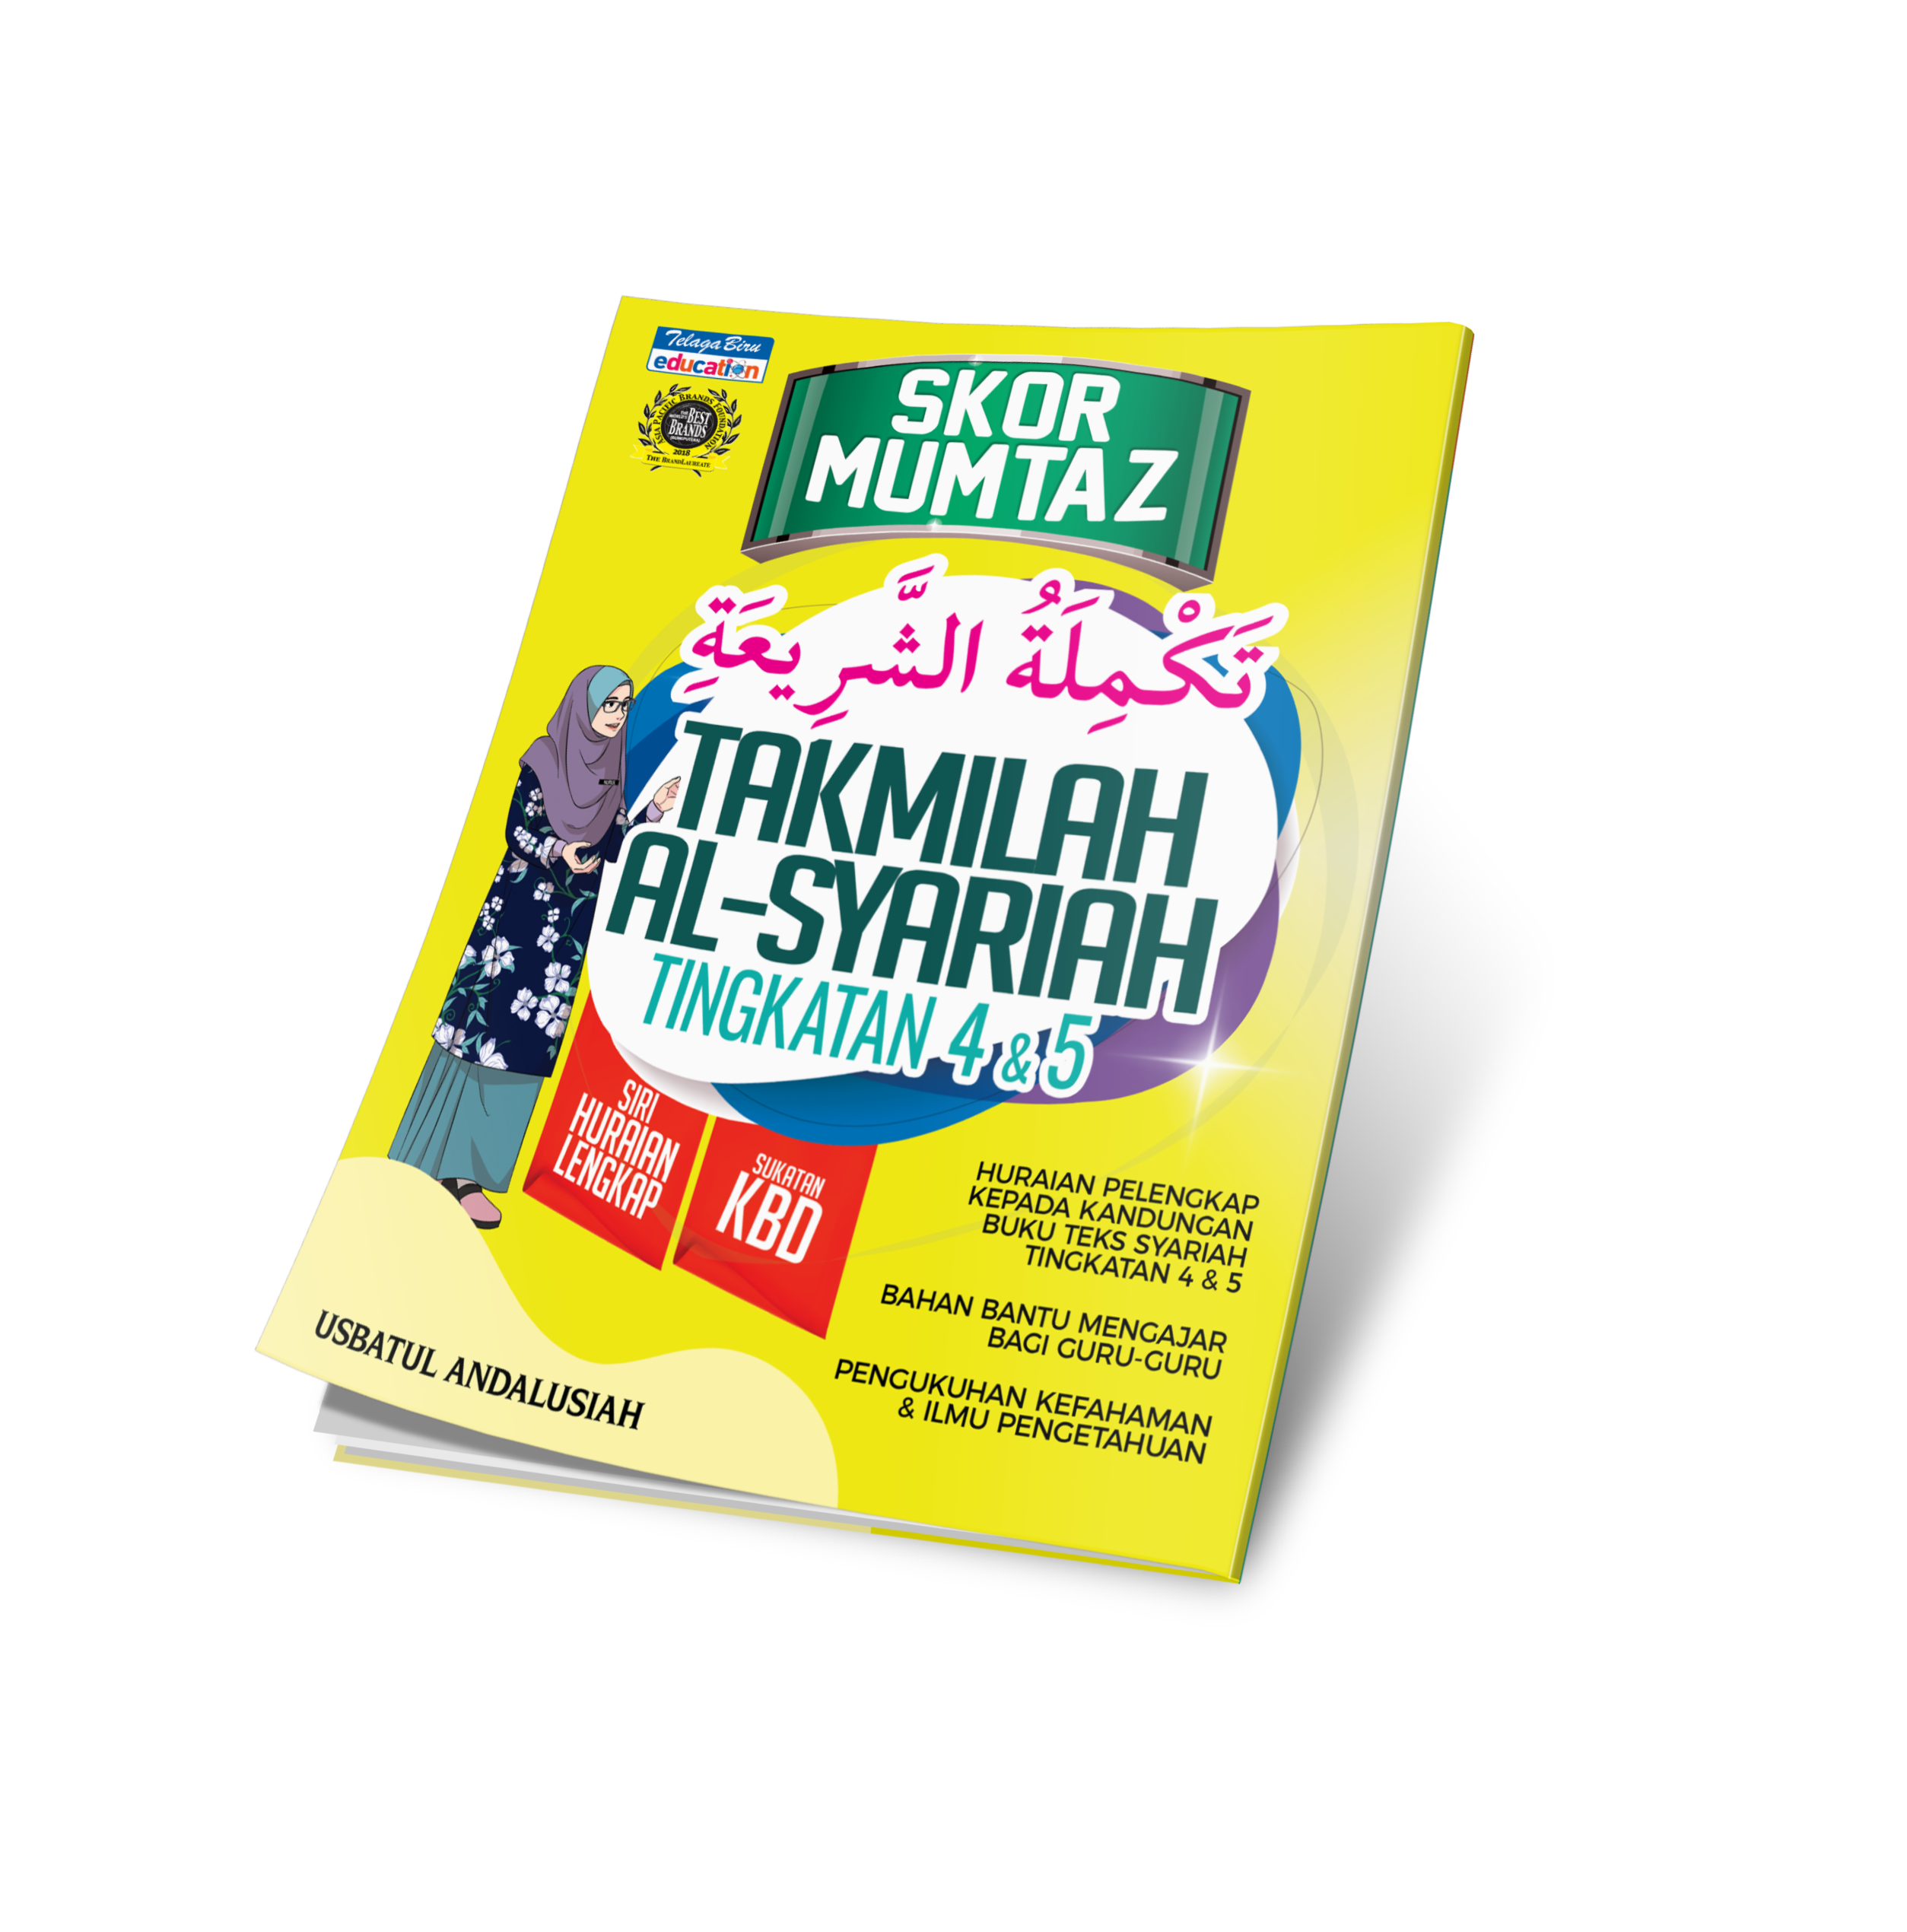 Skor Mumtaz Takmilah Al-Syariah Tingkatan 4 & 5 - (TBBS1182)